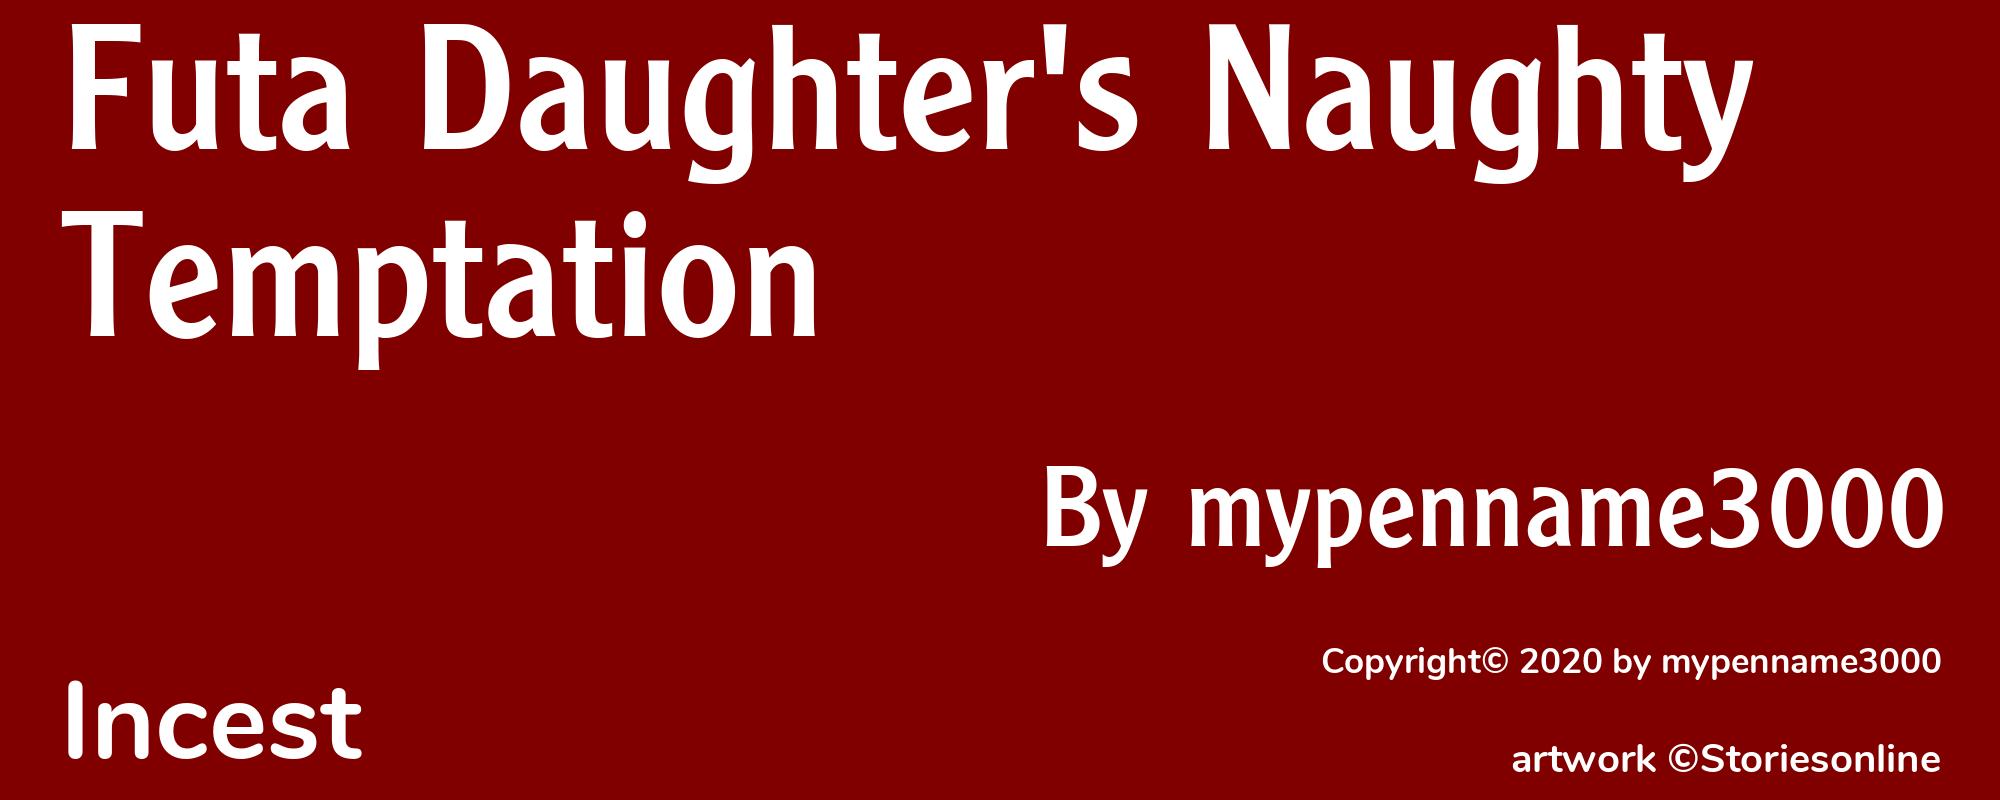 Futa Daughter's Naughty Temptation - Cover